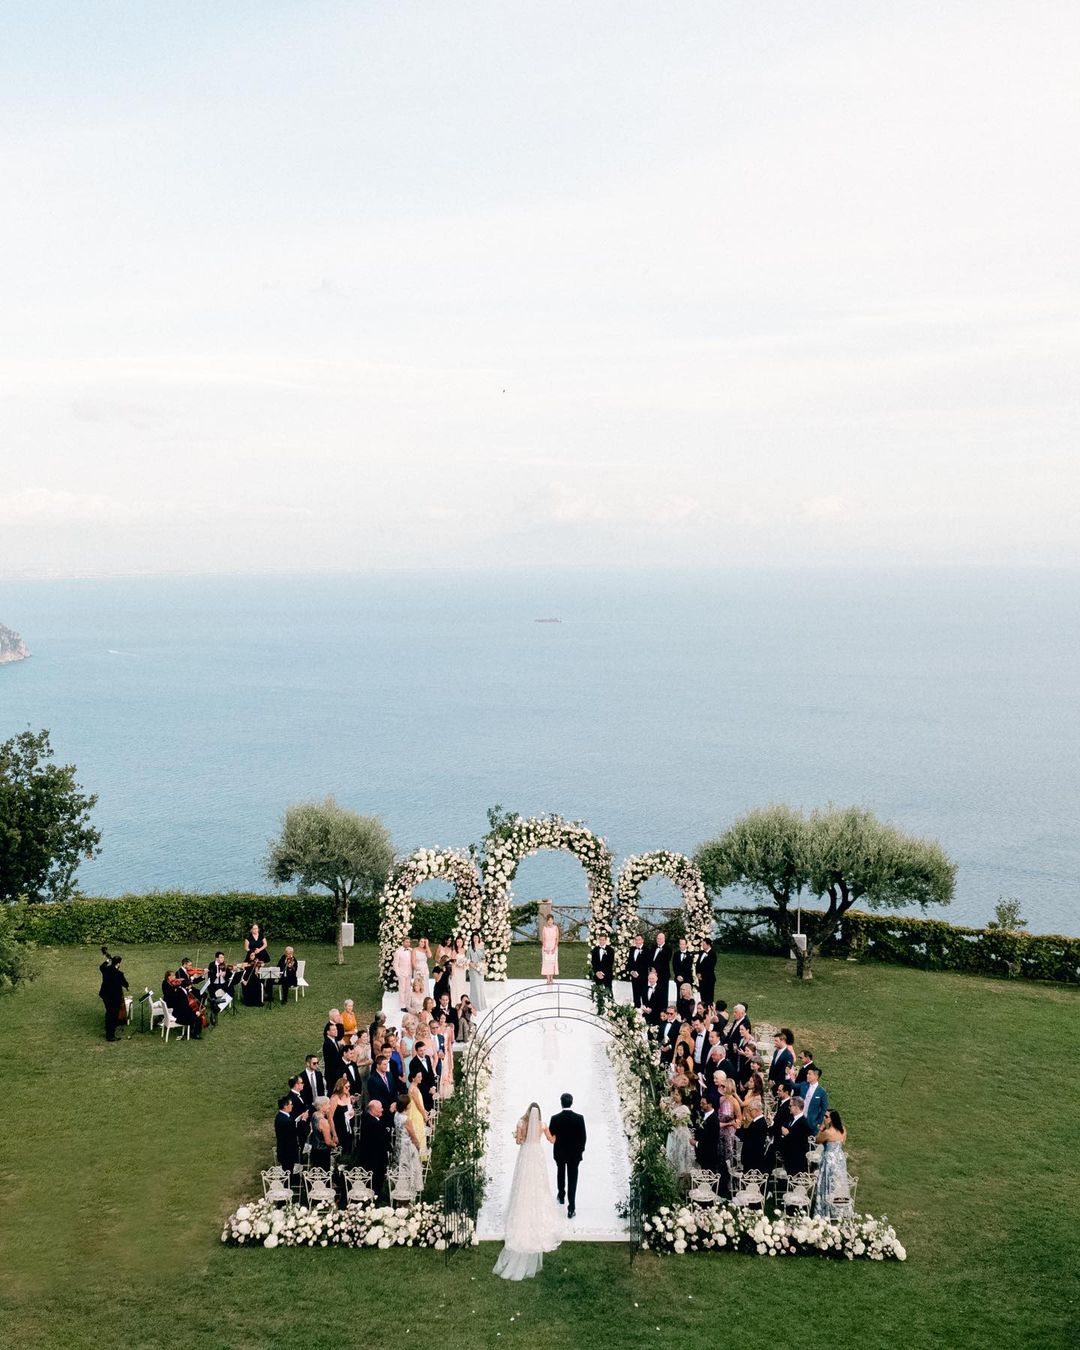 Destination wedding venue - Villa Cimbrone